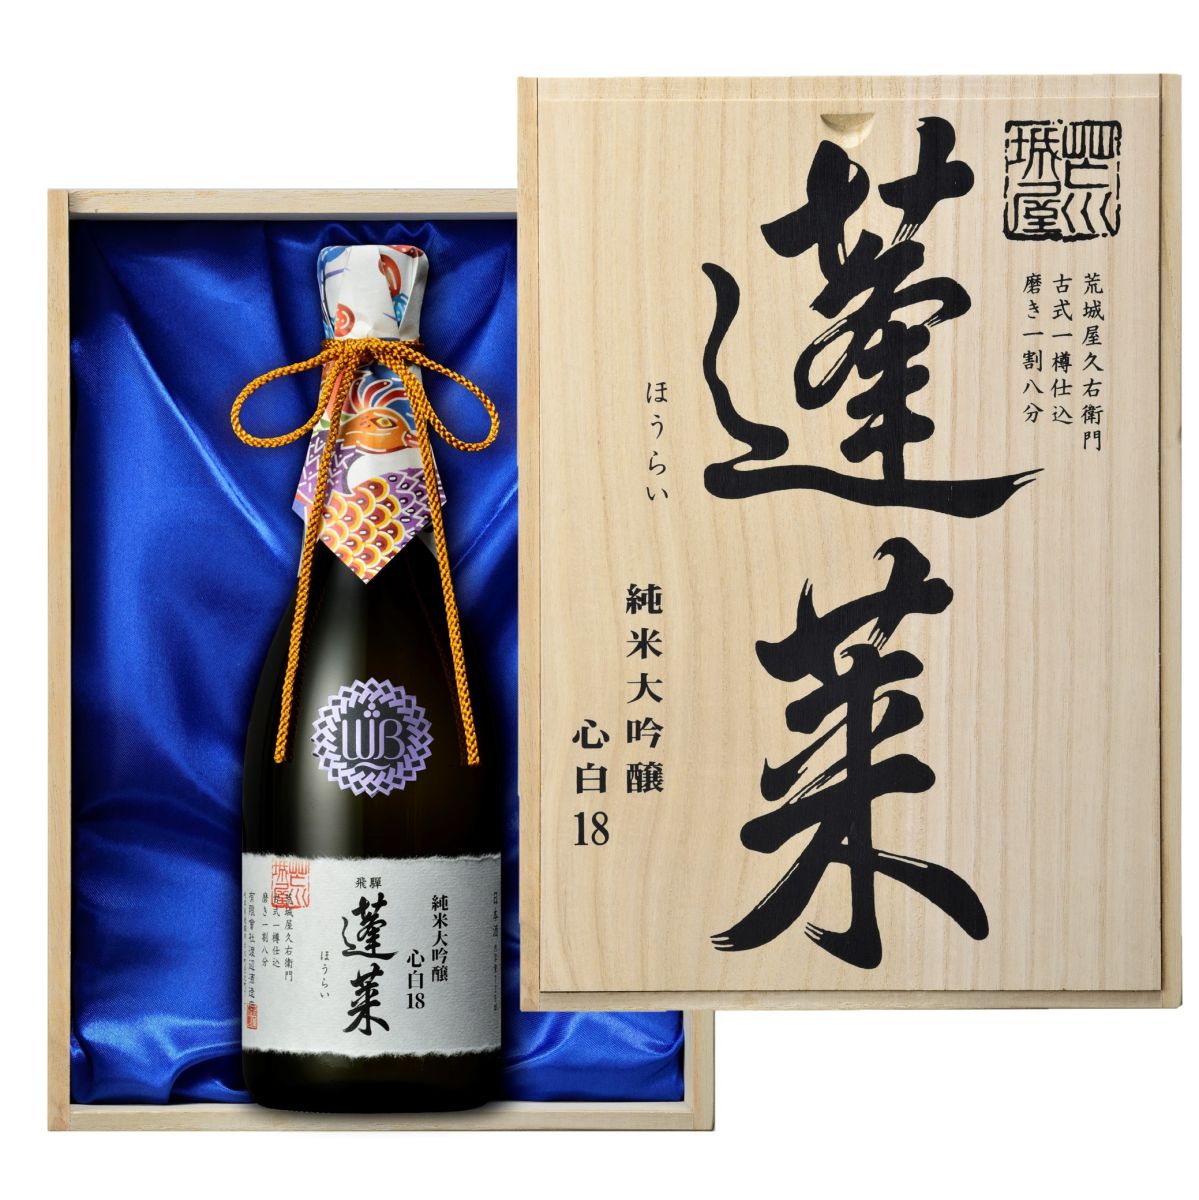 www.hcmus.edu.vn - 日本酒 地酒 飛騨 渡辺酒造 蓬莱 番外品 非売品の酒 1800ml 1梱包6本まで 価格比較